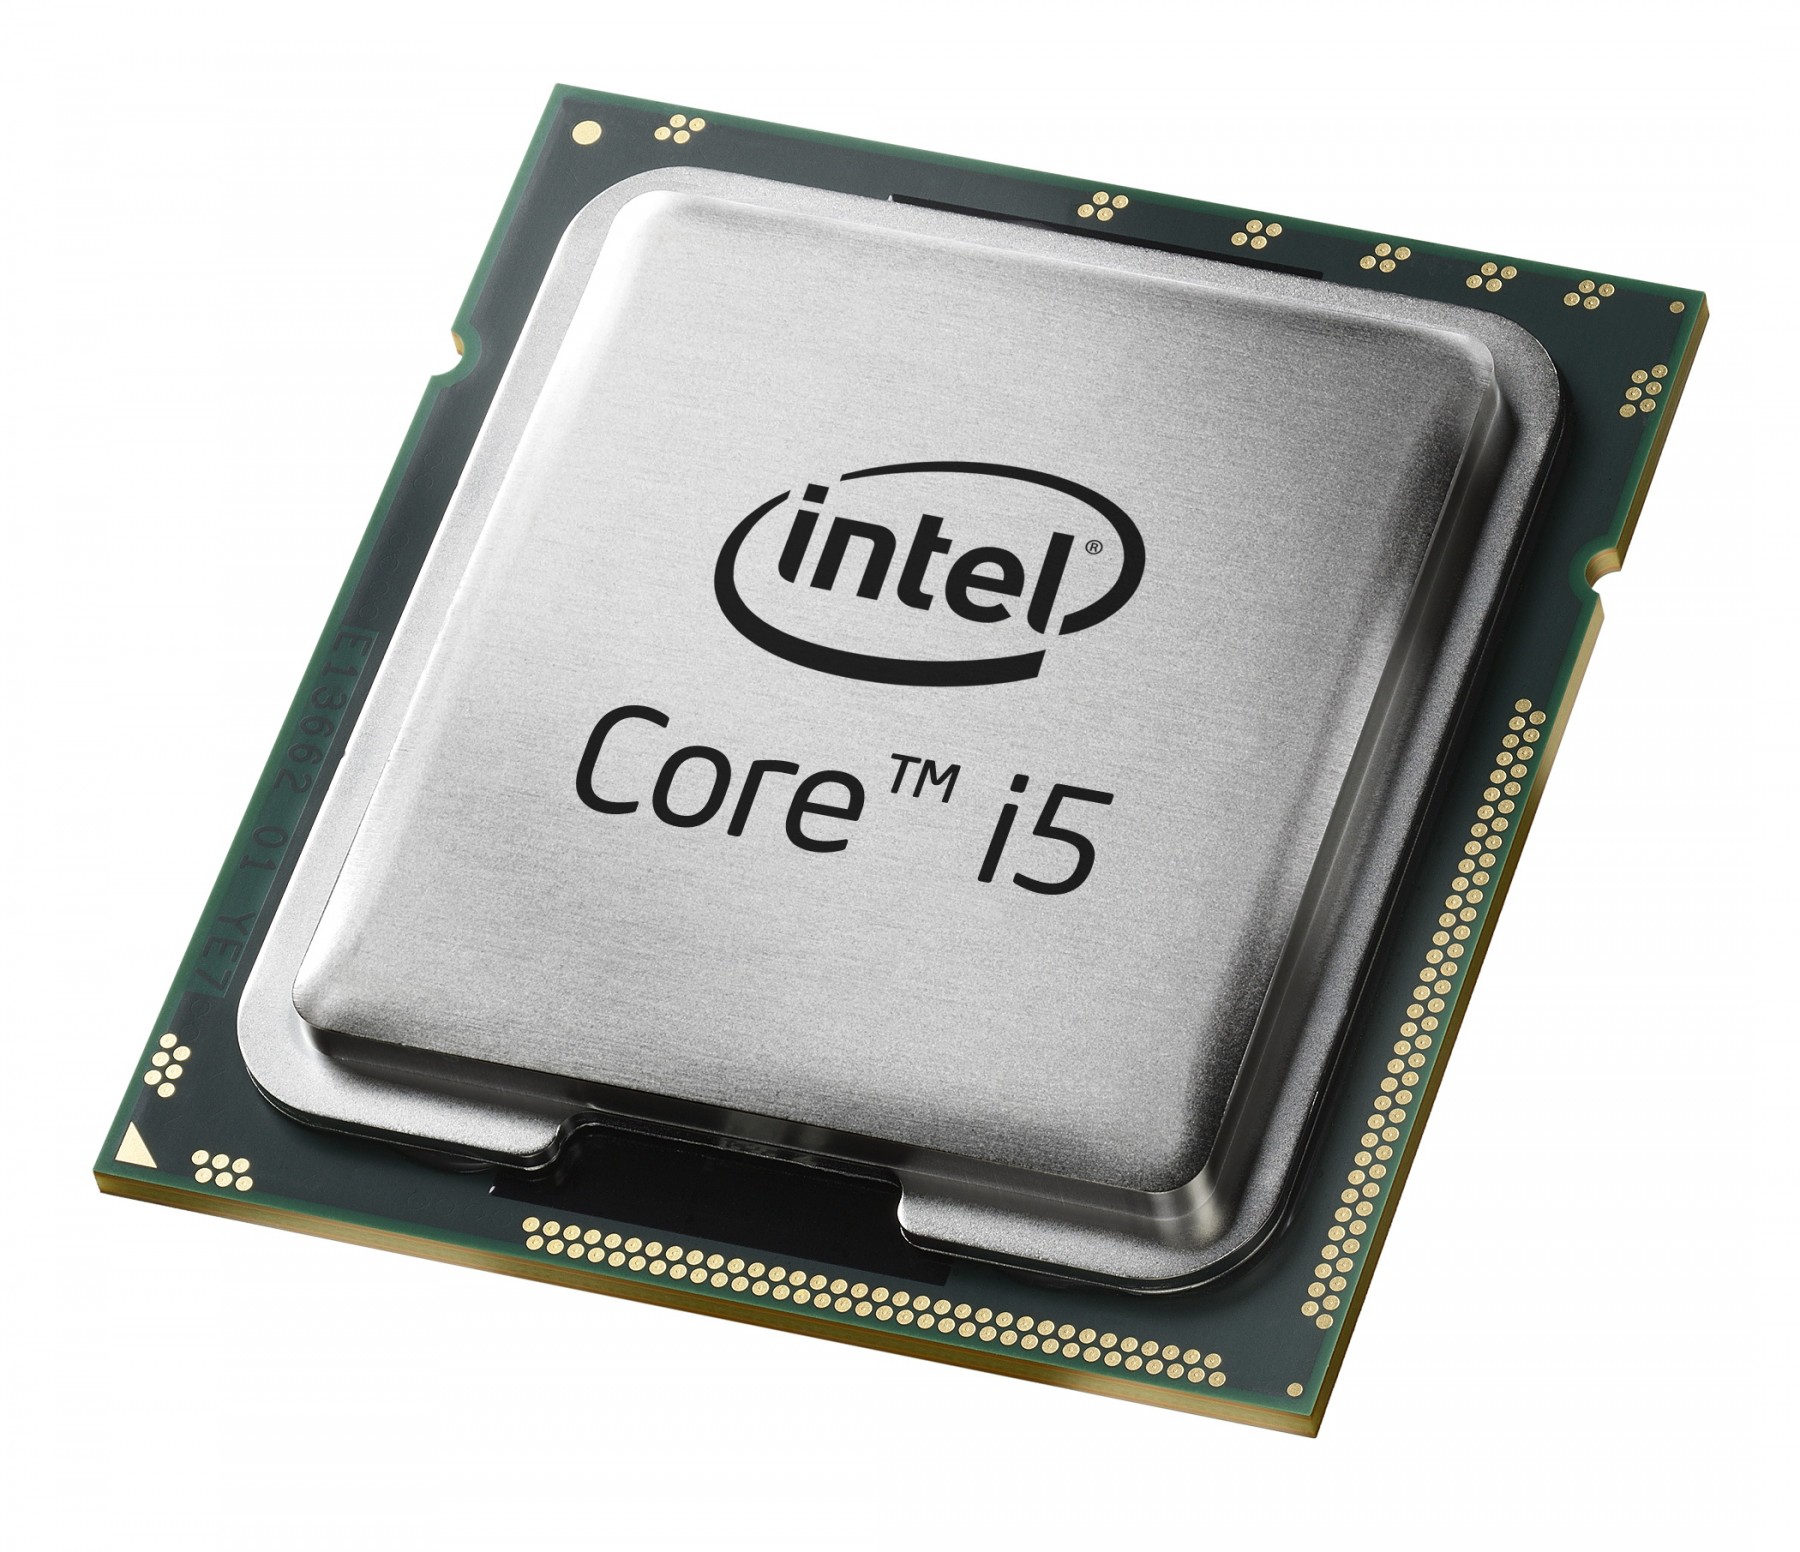 500030056-Intel Core i5-3470T SR0RJ 2.9Ghz 5GT/s LGA 1155 Processor-image